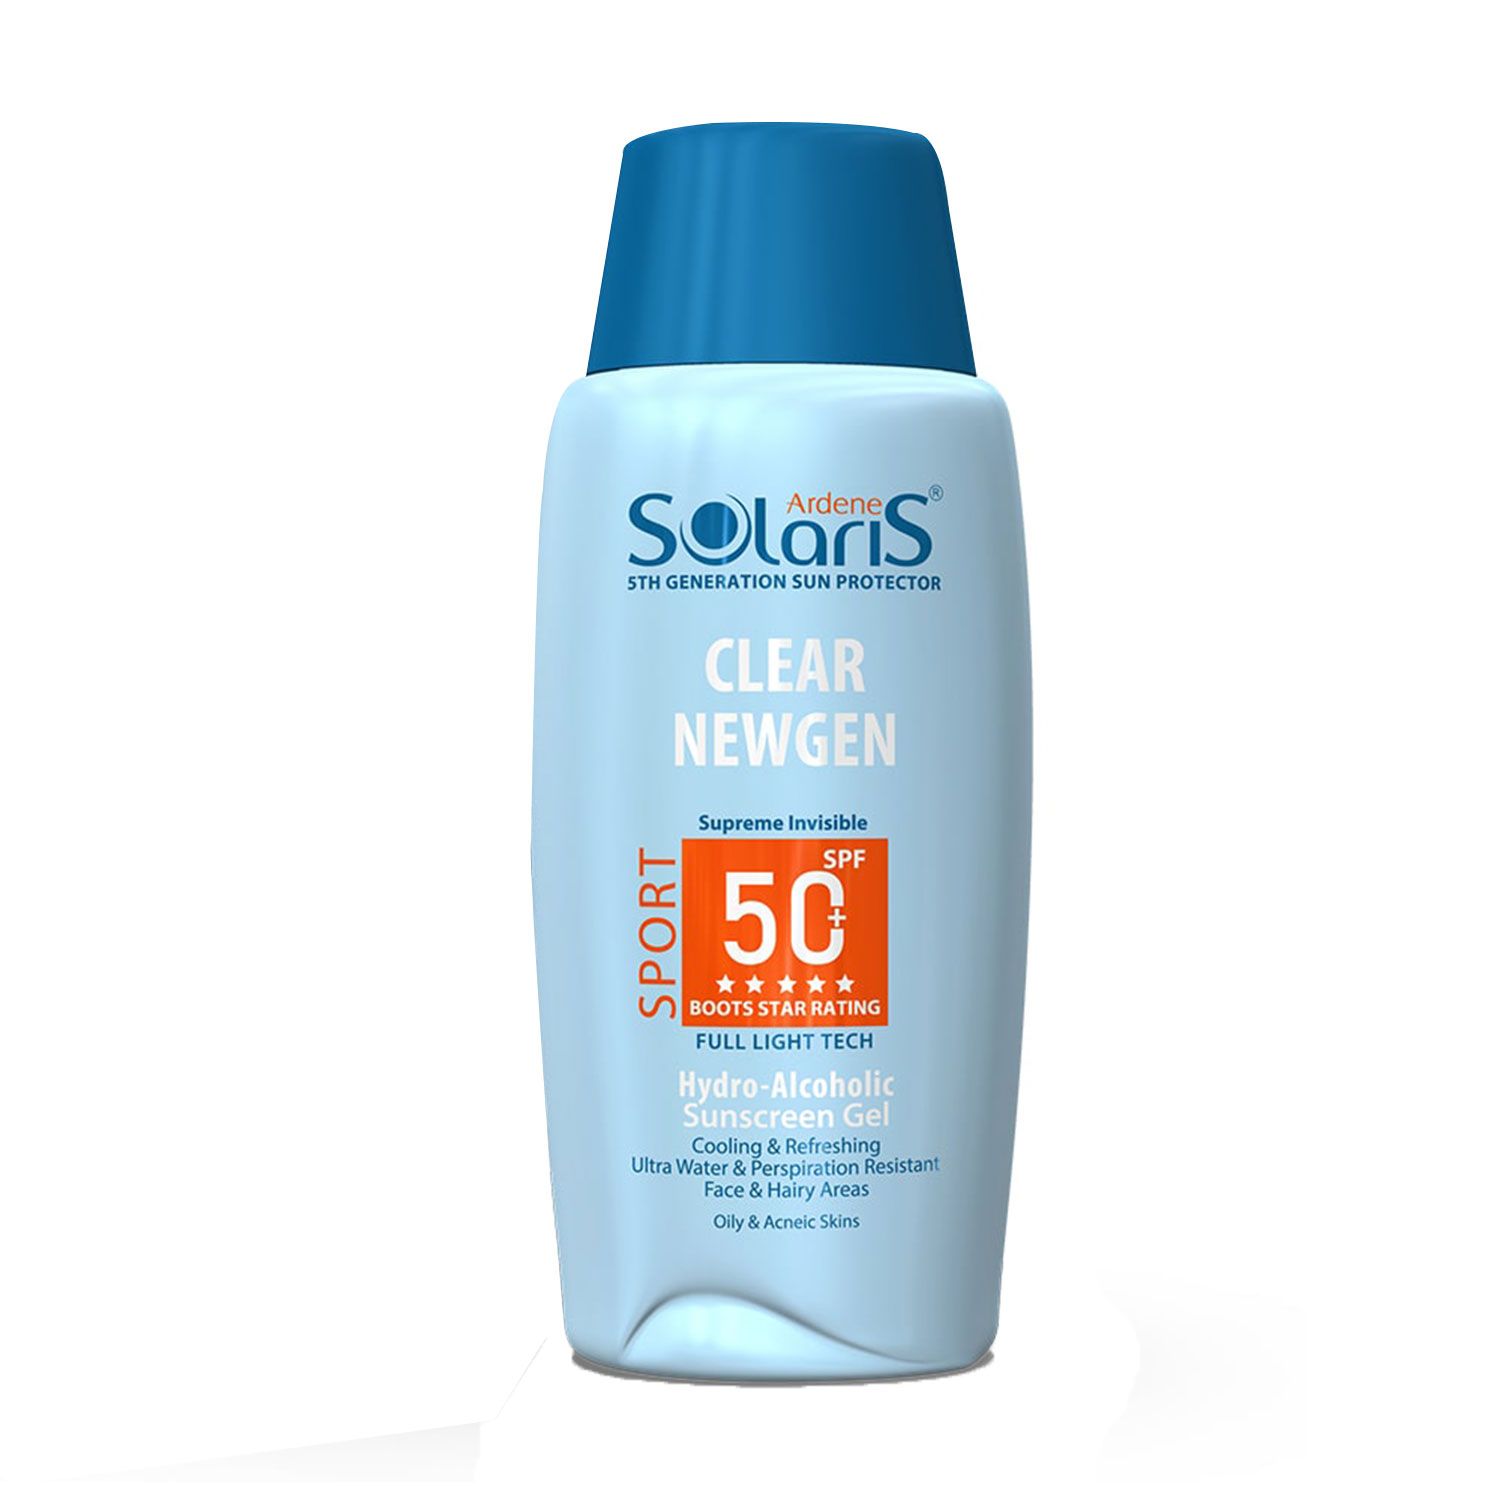 ژل ضد آفتاب بی رنگ آردن سولاریس SPF50 مدل Clear Newgen مناسب پوست های چرب حجم 100 میلی لیتر -  - 1